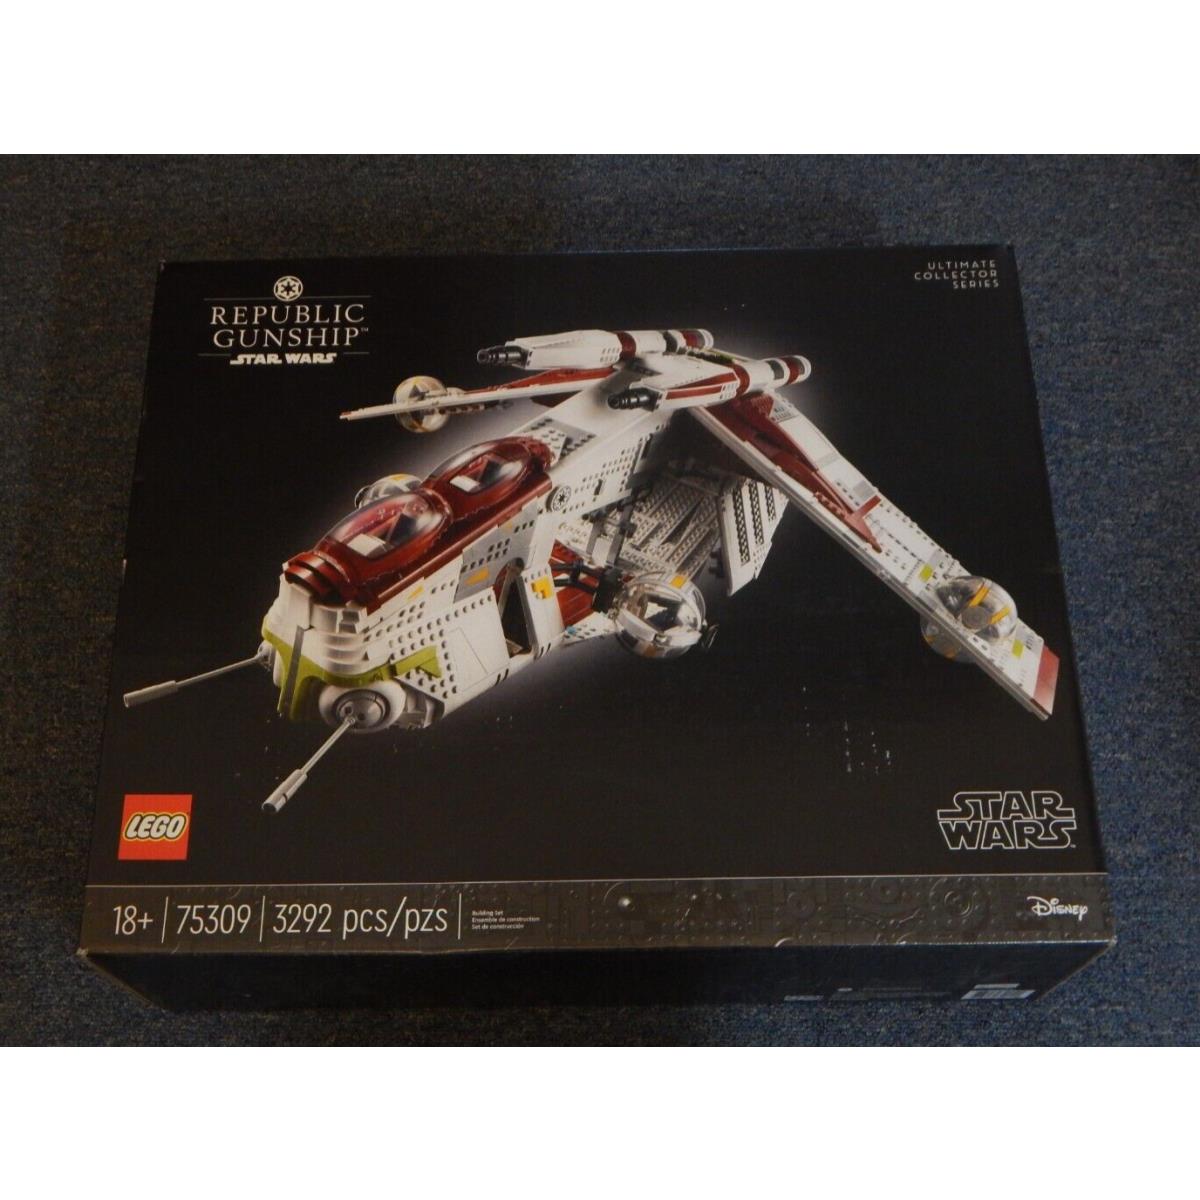 Lego Star Wars Republic Gunship 75309 Building Kit Collectible Set 3292 Pieces